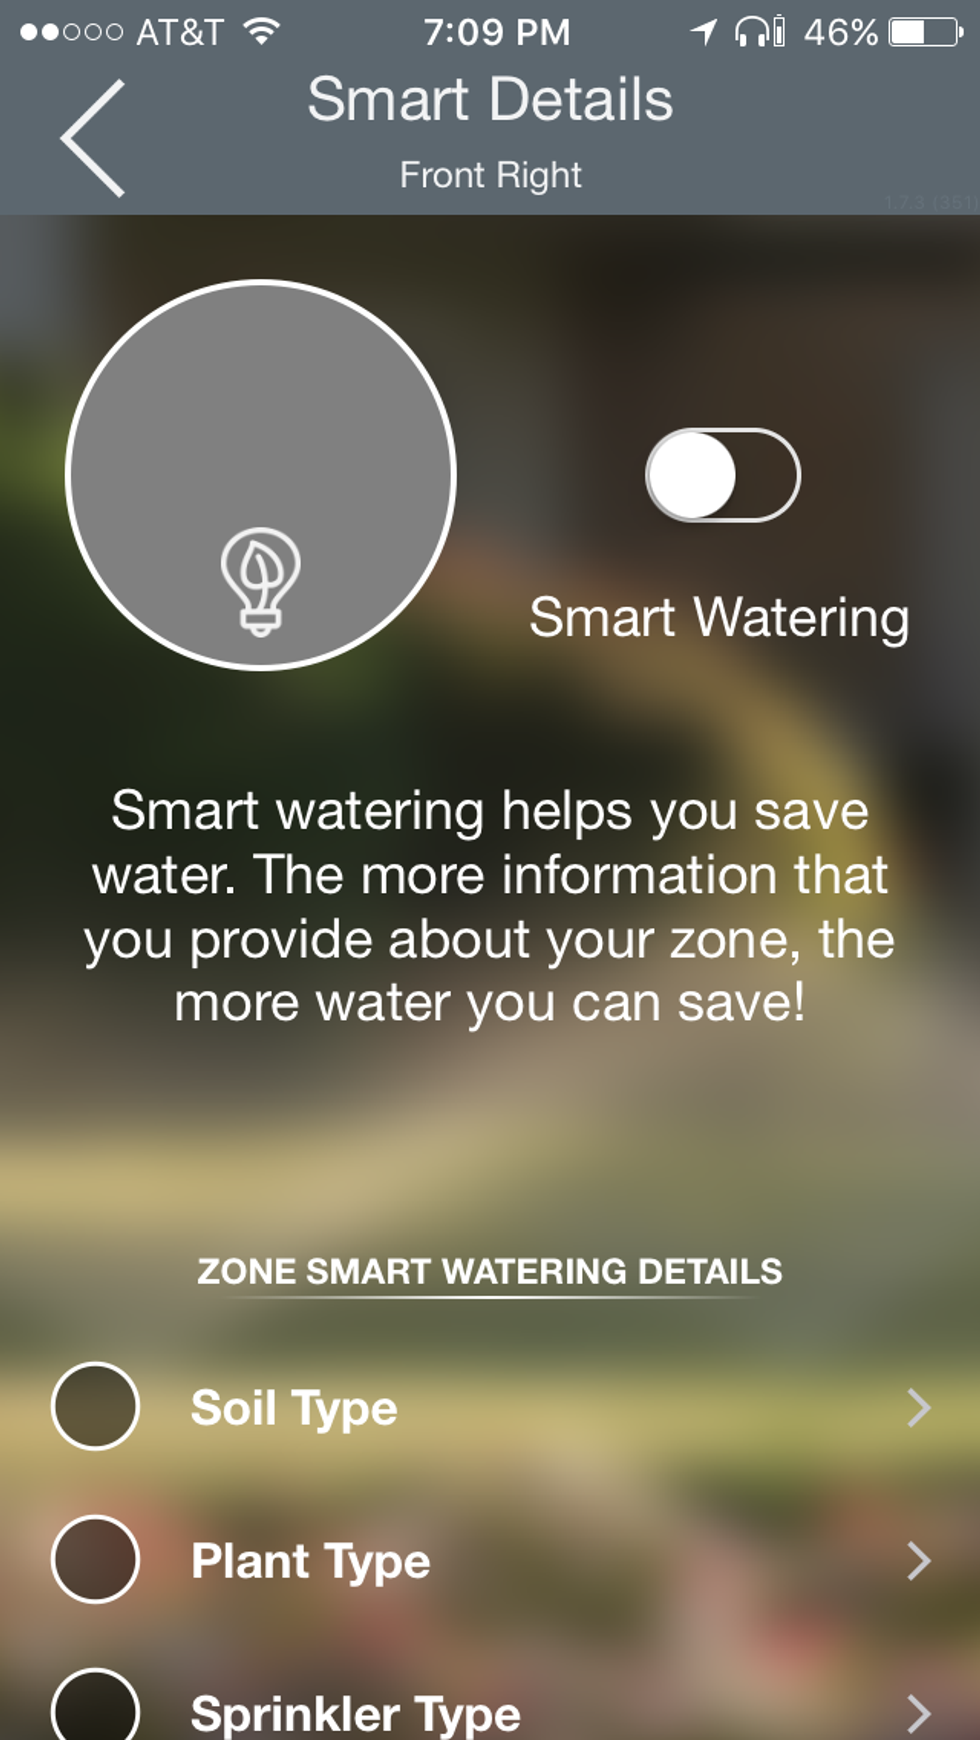 Smart details screen in bhyve app